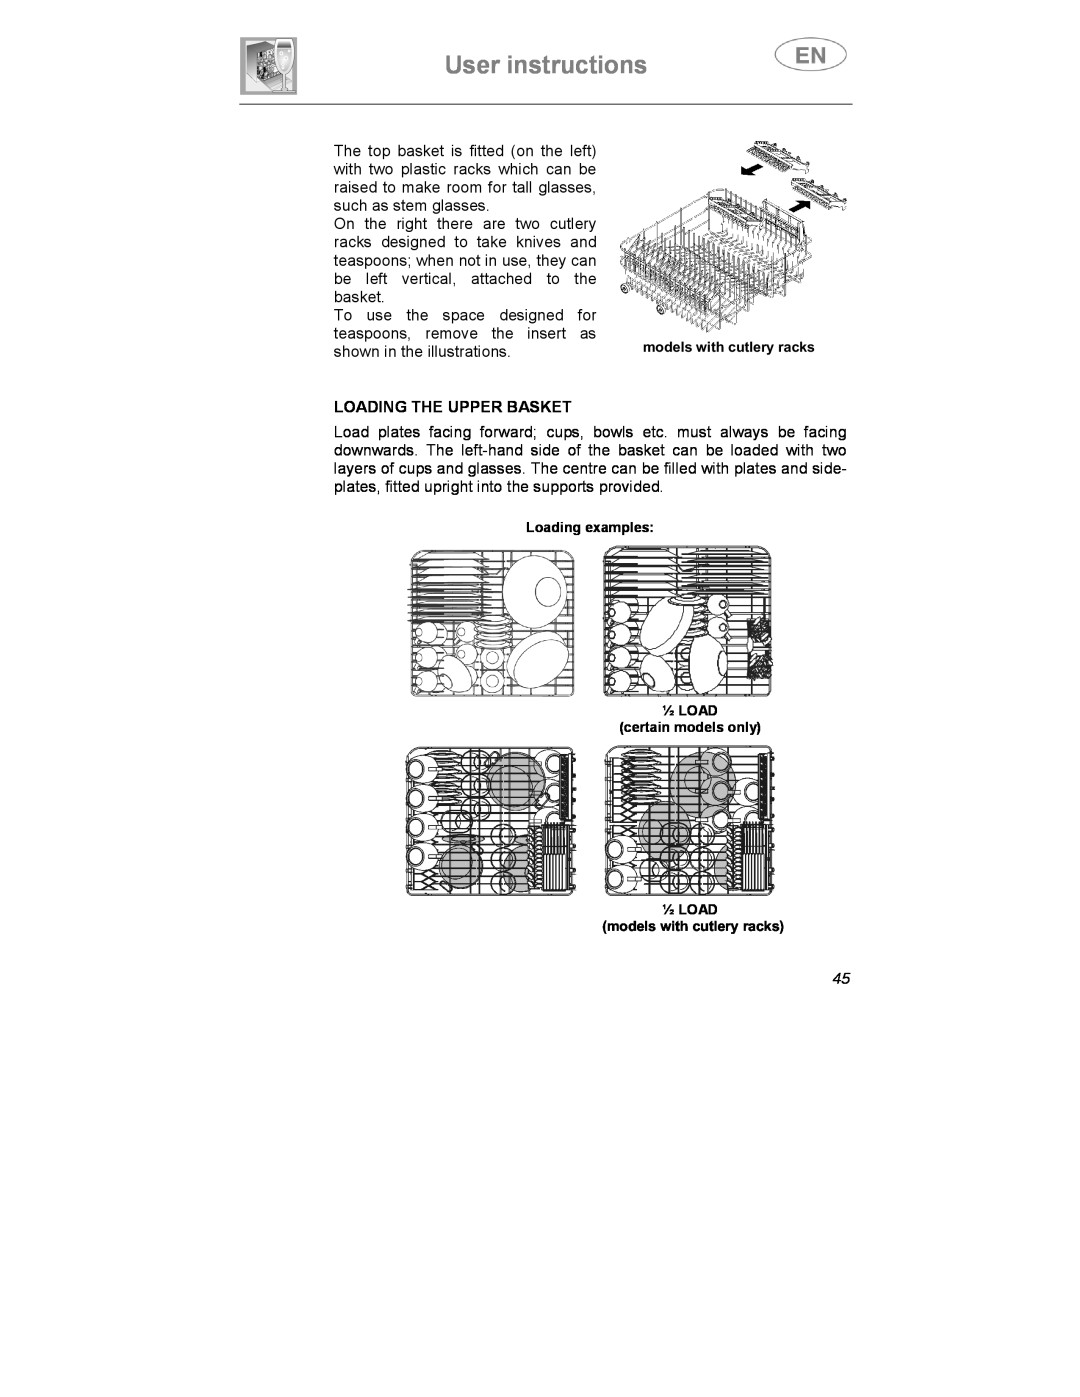 Smeg KLS1257B, KLS01-2 instruction manual User instructions, Loading The Upper Basket 